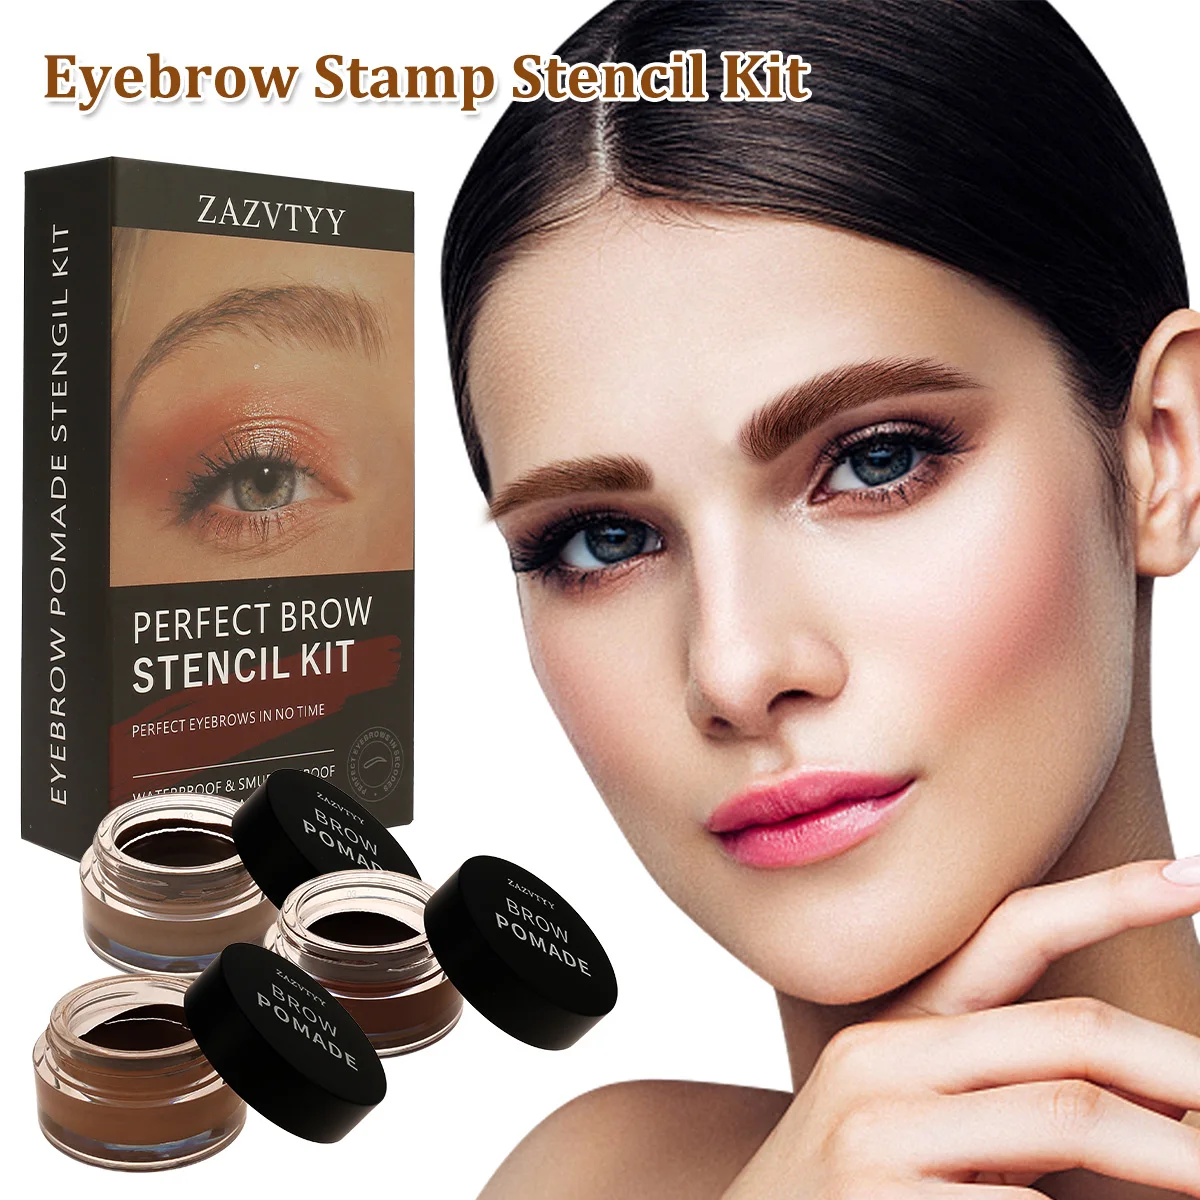 

Eyebrow Stamp Stencil Kit Waterproof Eye Brow Stamping Set with 10 Reusable Brow Stencils Sponge Applicator Long-Lasting Eyebrow